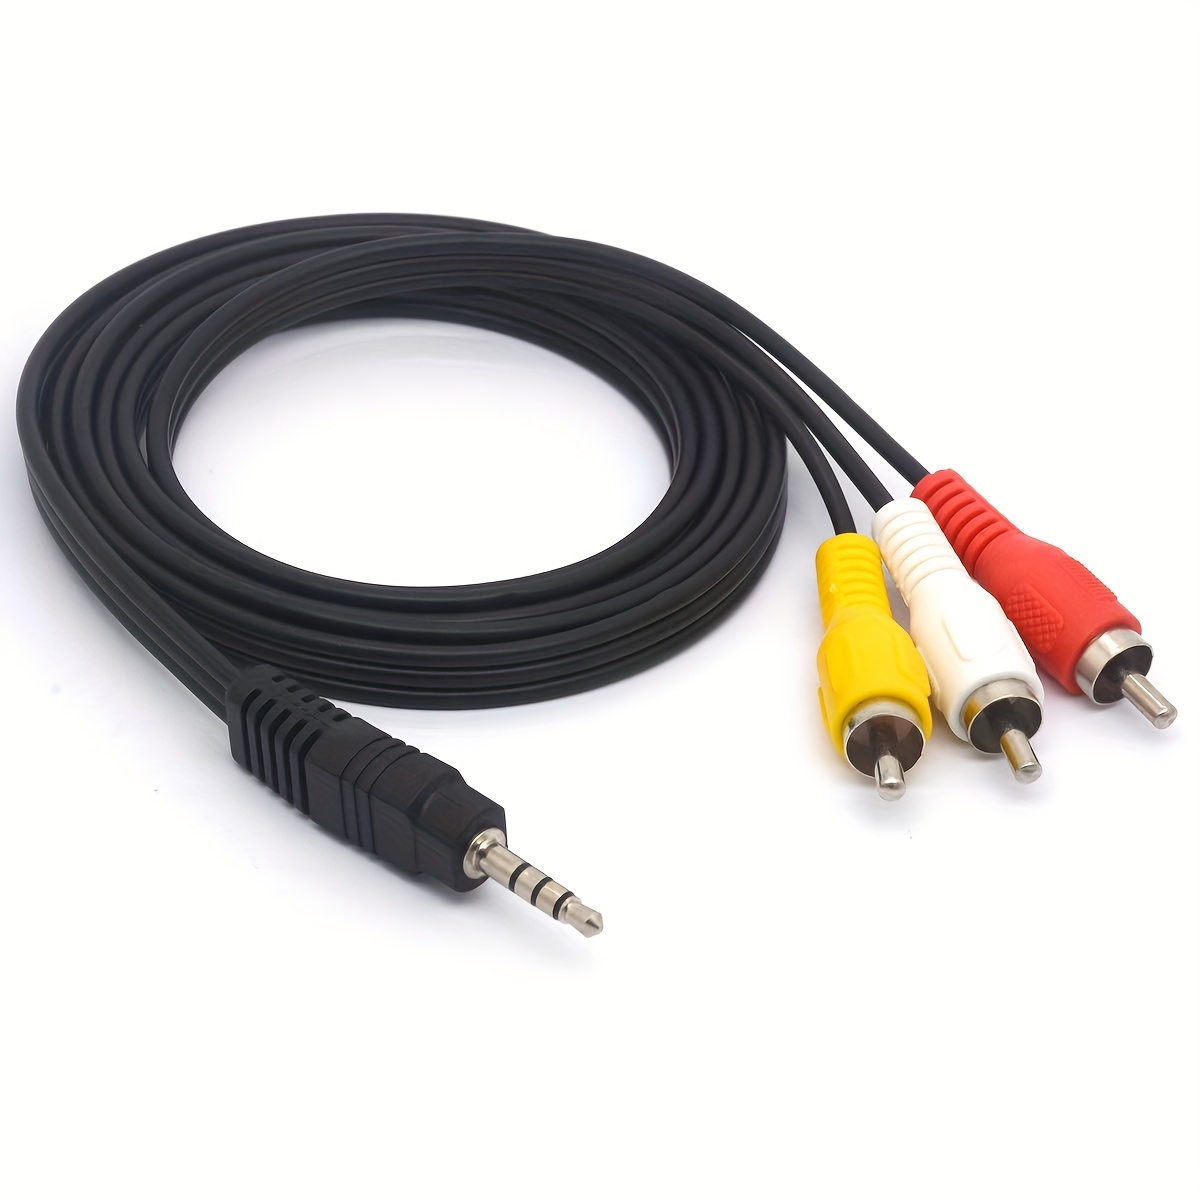 Cable A/V mini Jack 4 polos a 3 RCA